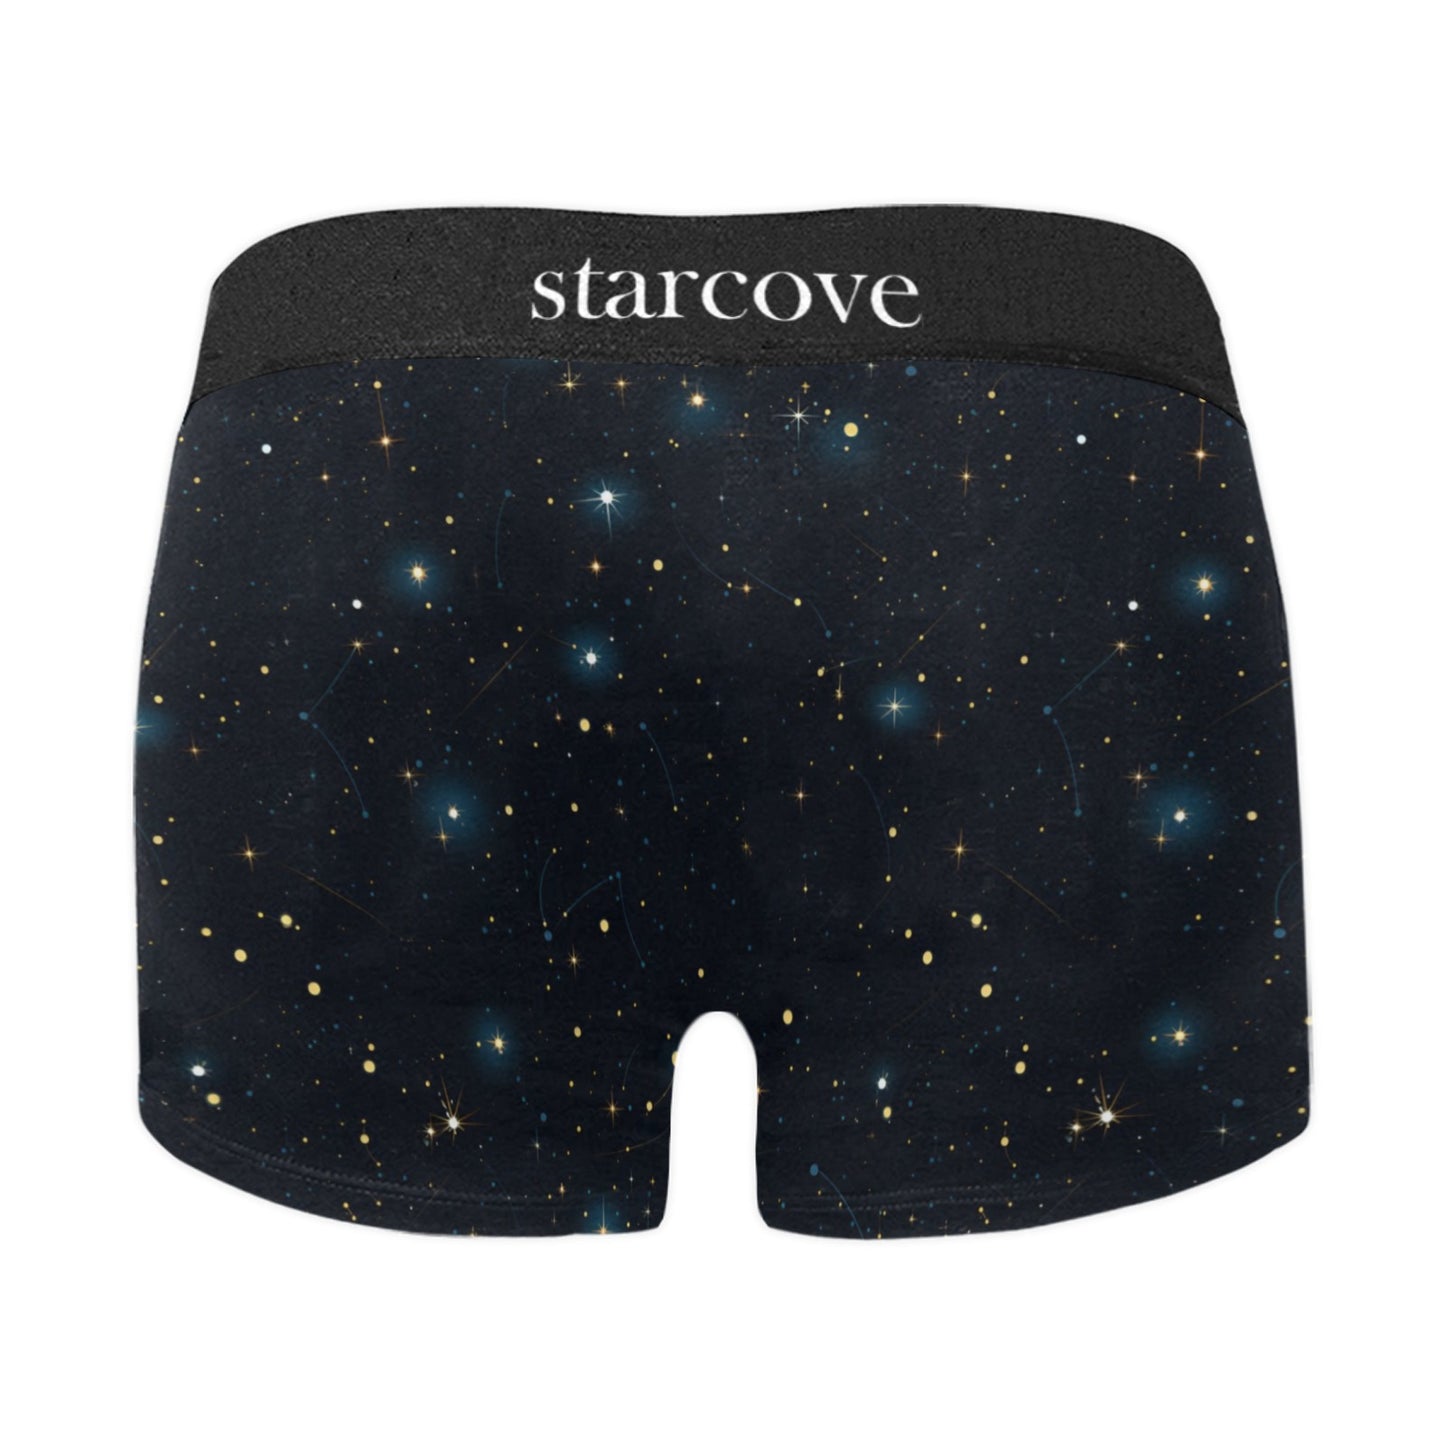 Constellation Galaxy Men Boxer Briefs, Stars Space Universe Underwear Pouch Funny Sexy Anniversary For Him Honeymoon Birthday Plus Size